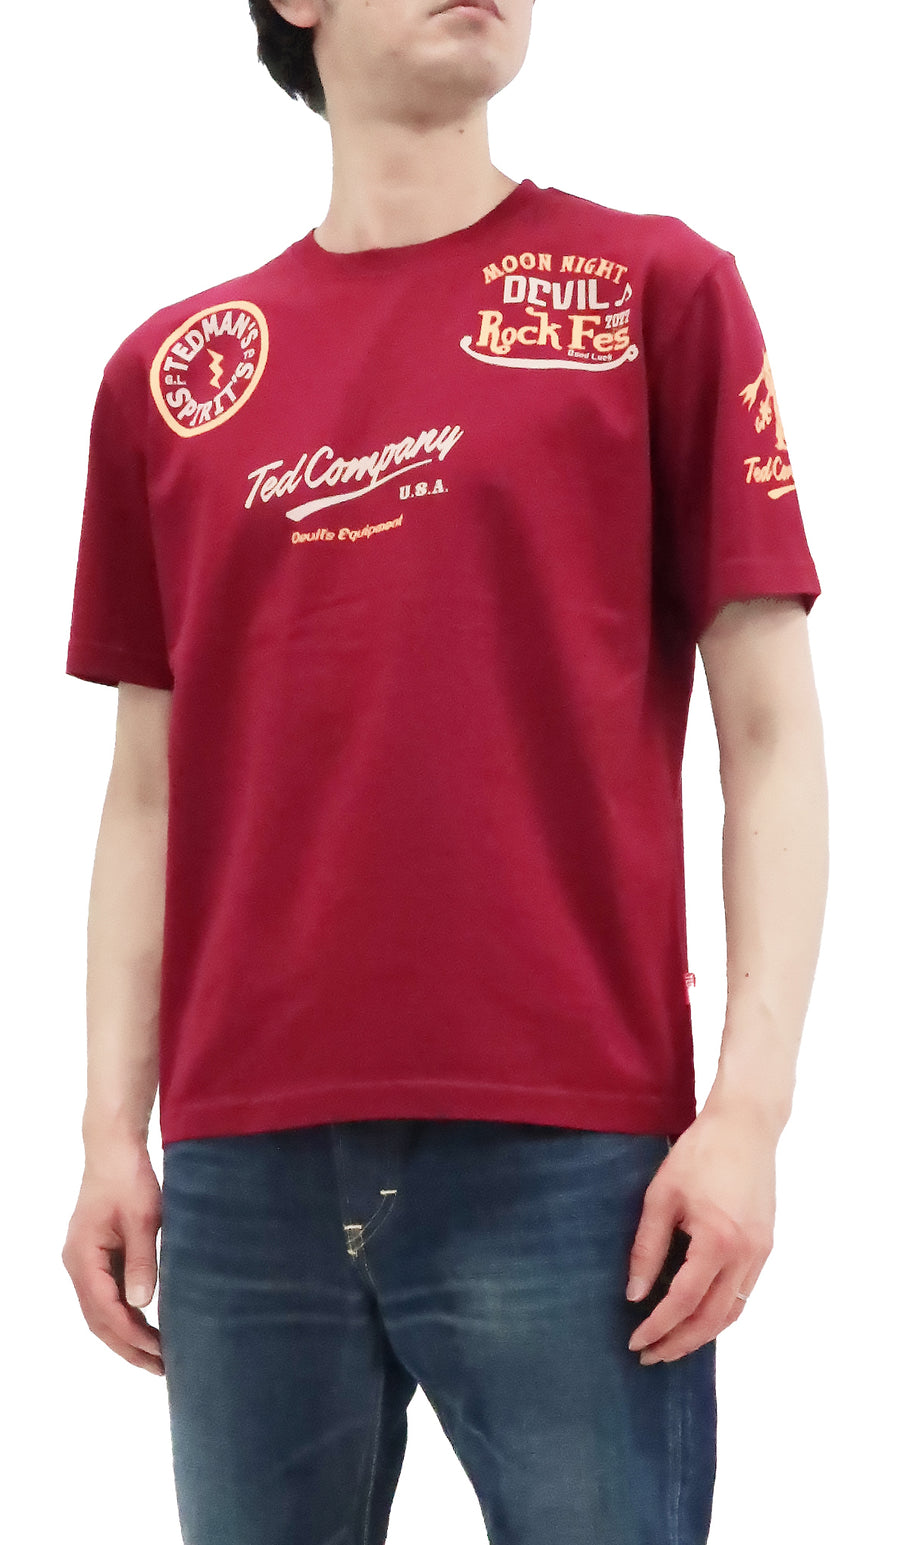 Tedman T-Shirt Men's Lucky Devil Rock Graphic Short Sleeve Tee Efu-Shokai TDSS-551 Wine-Red